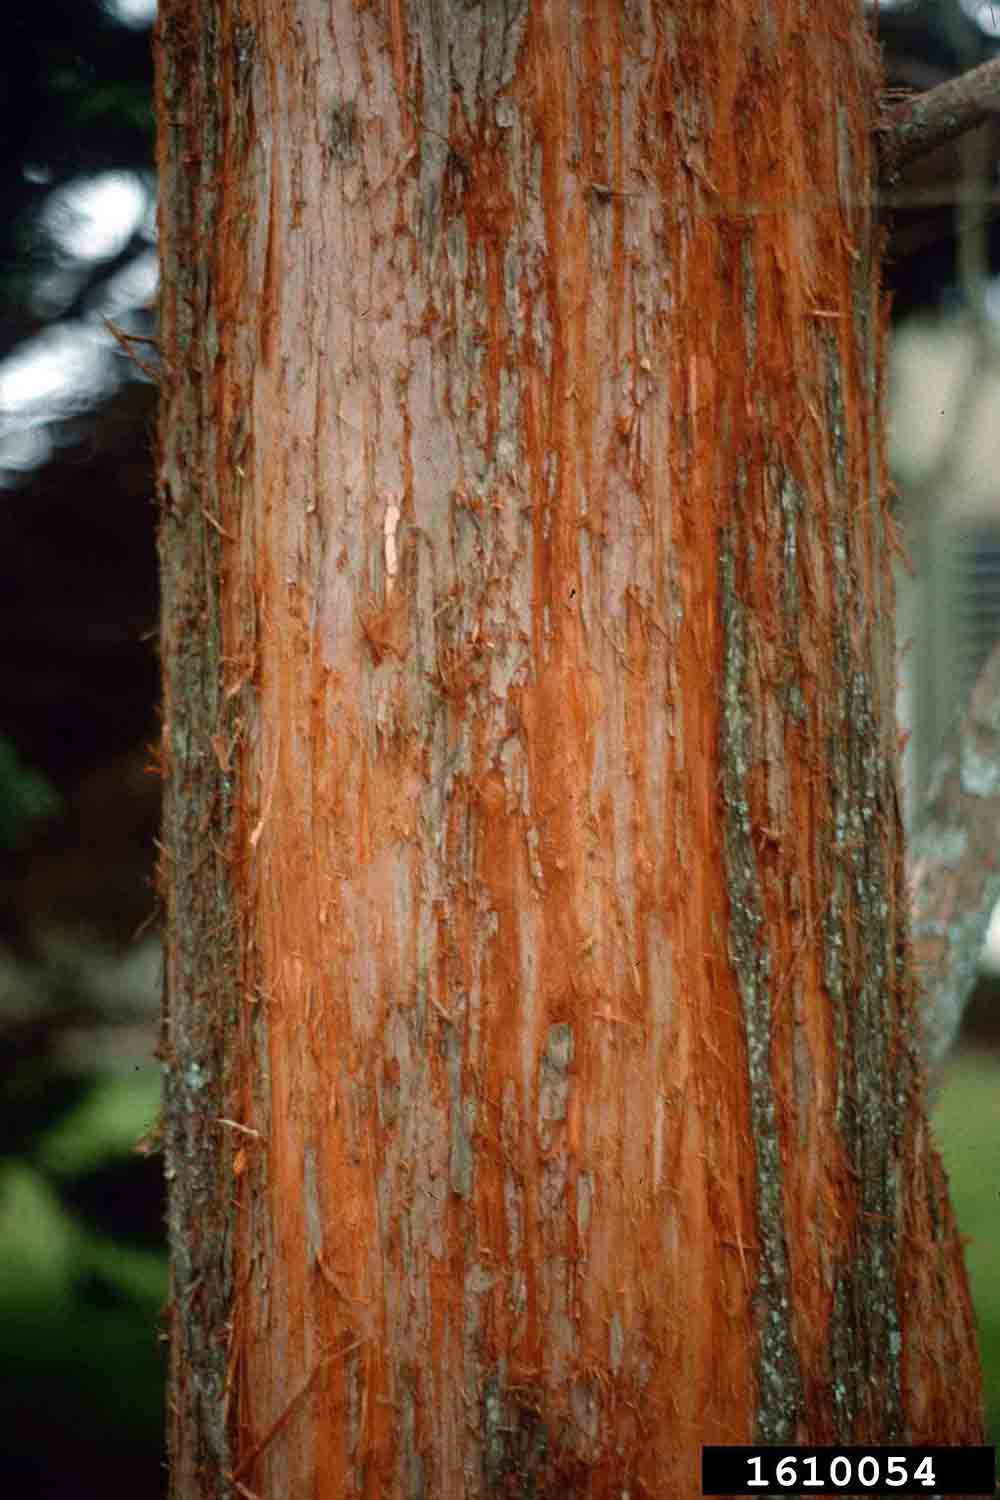 Dawn redwood bark on trunk